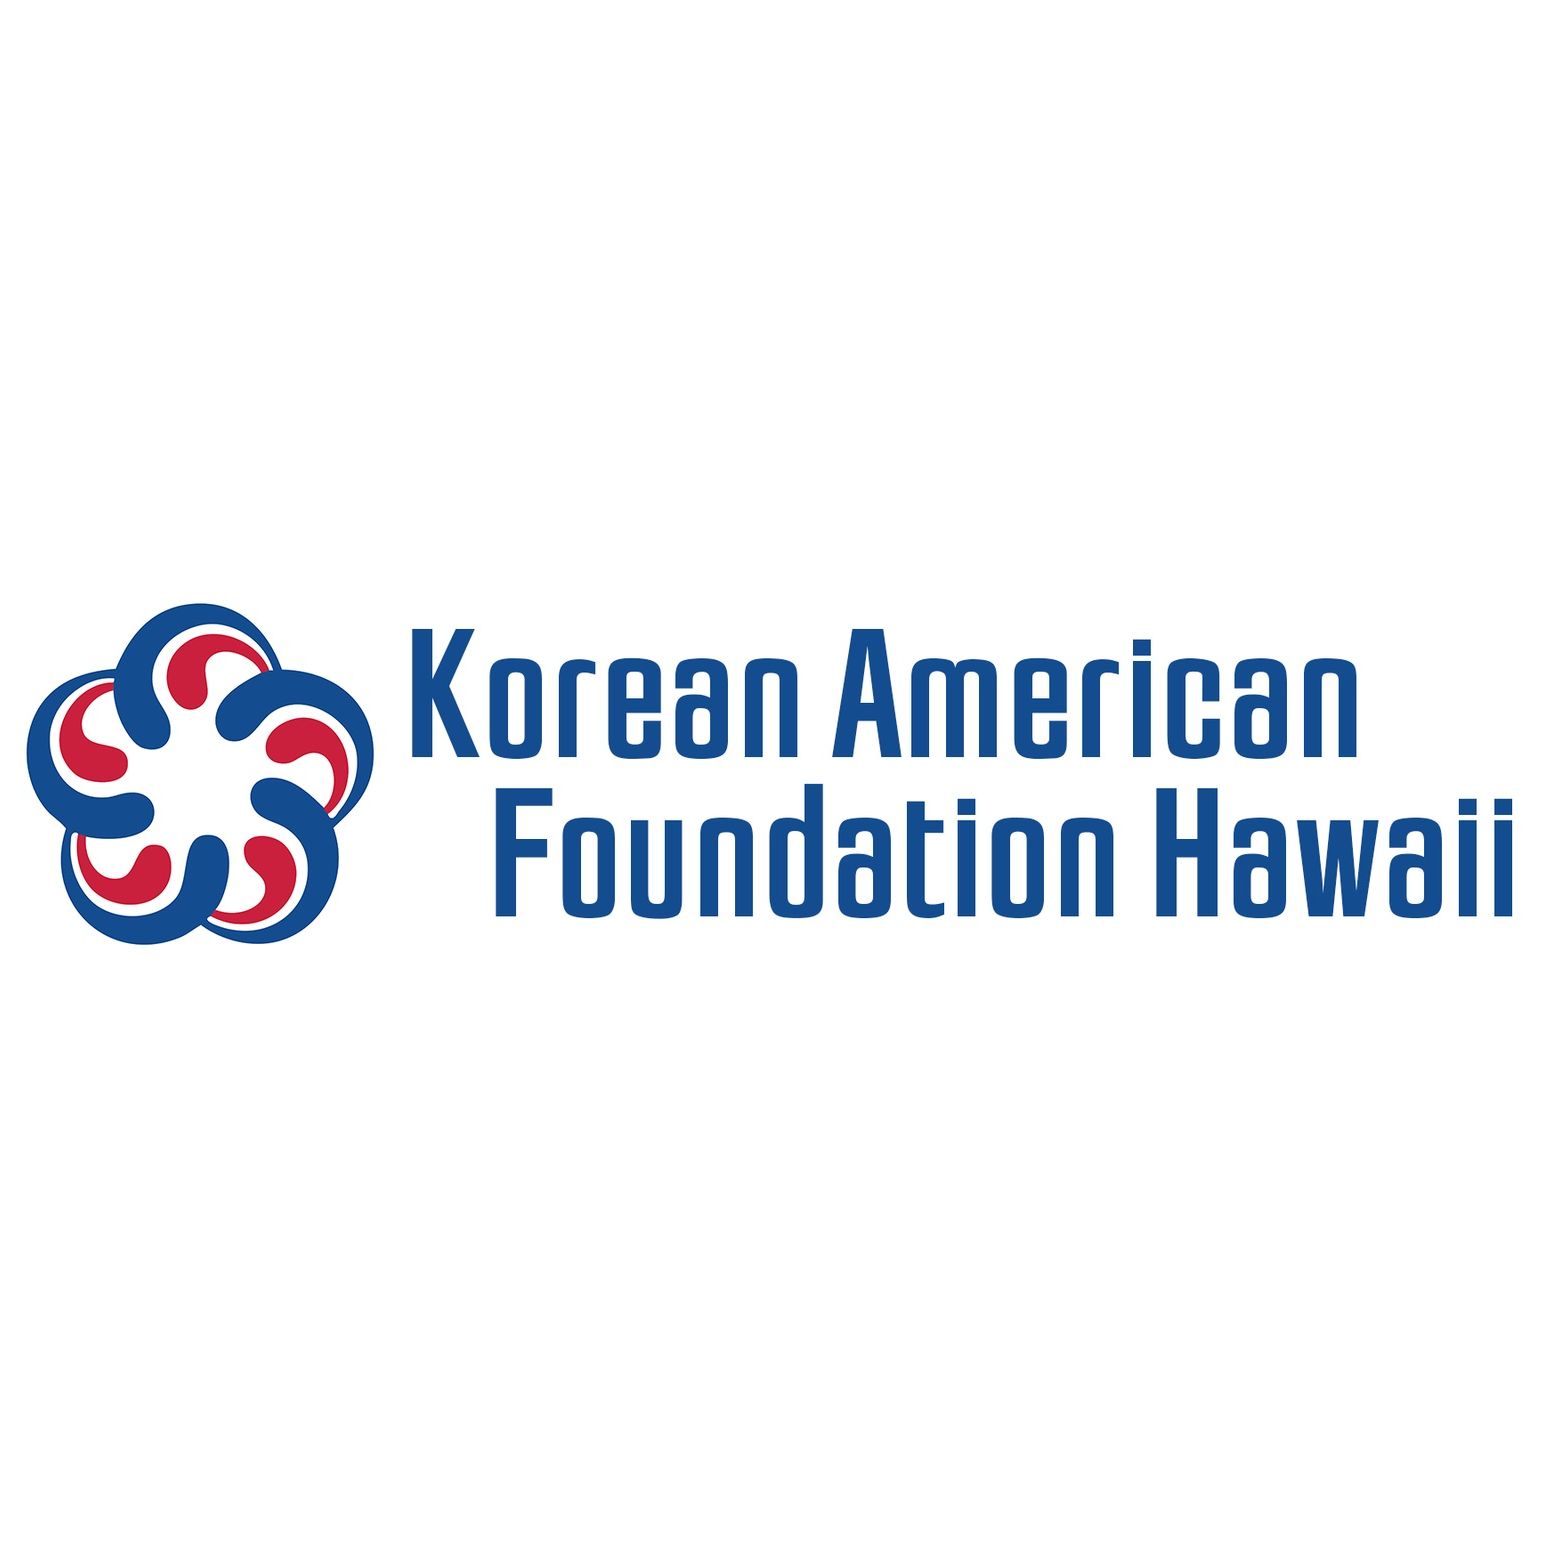 Korean Organizations in Hawaii - Korean American Foundation Hawaii